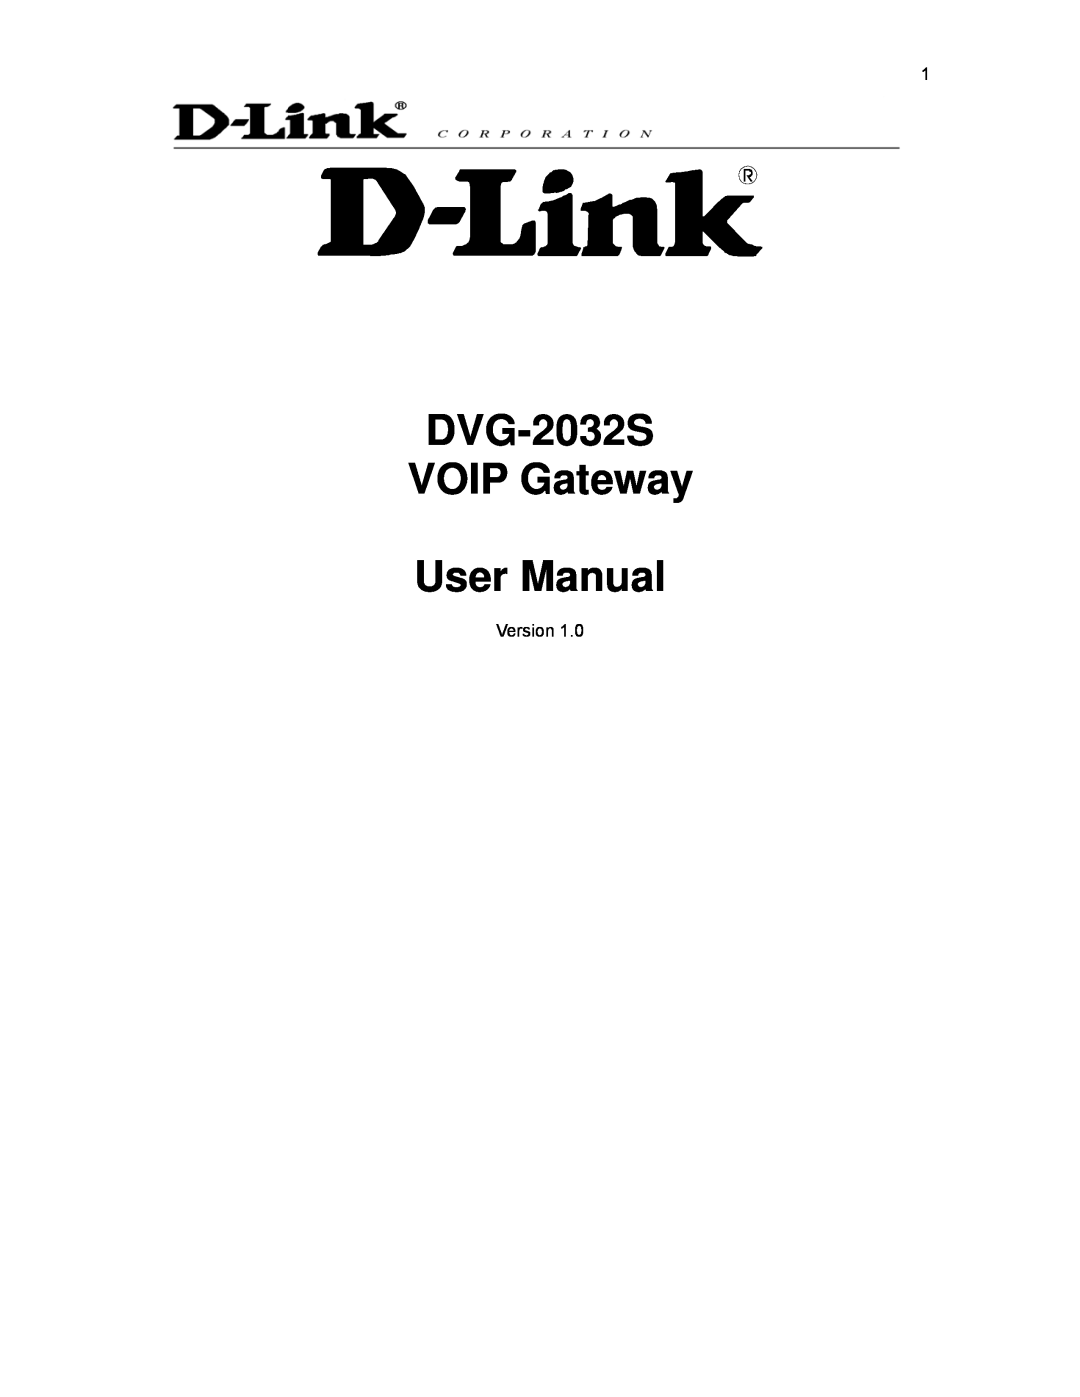 D-Link user manual DVG-2032S VOIP Gateway User Manual, Version 